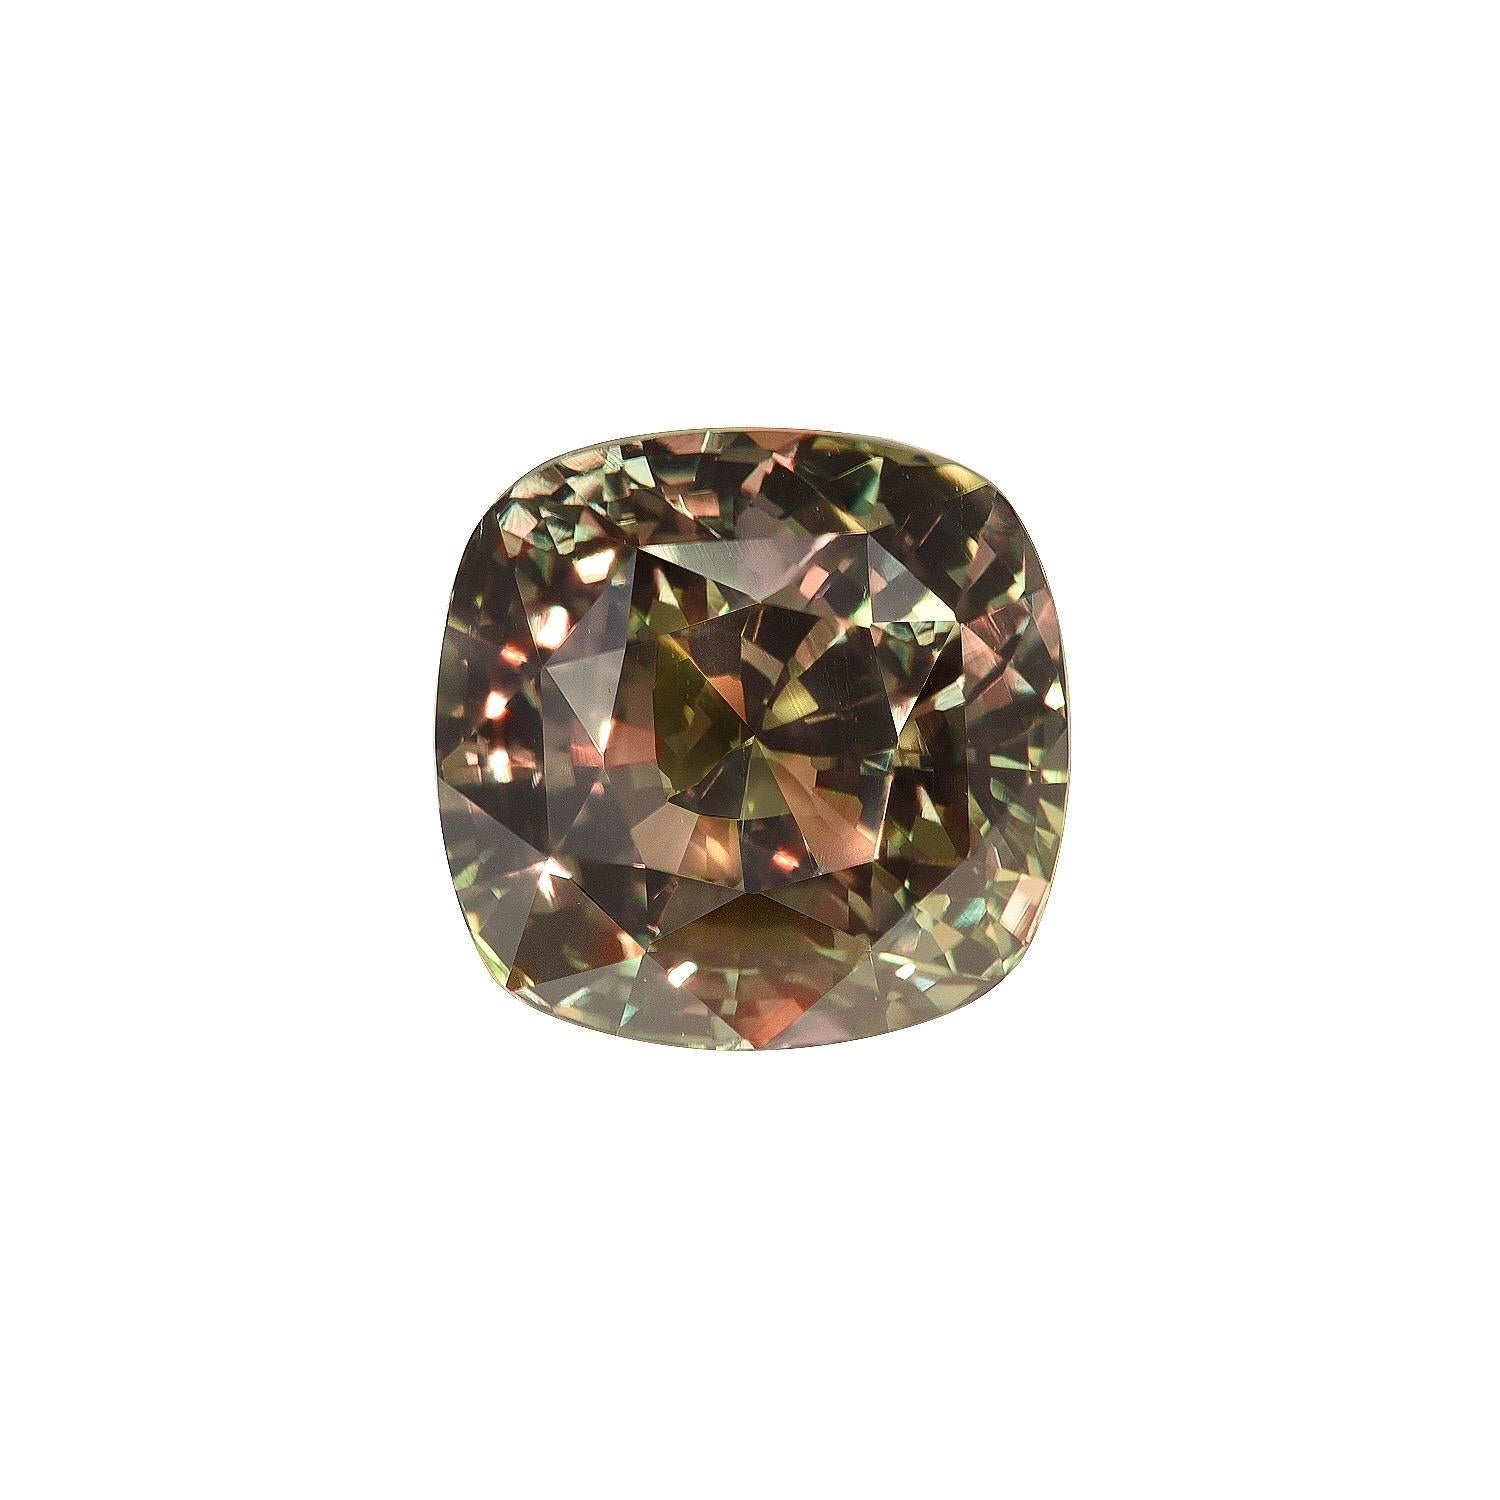 Rare and exclusive natural Alexandrite cushion cut gem from Sri Lanka (